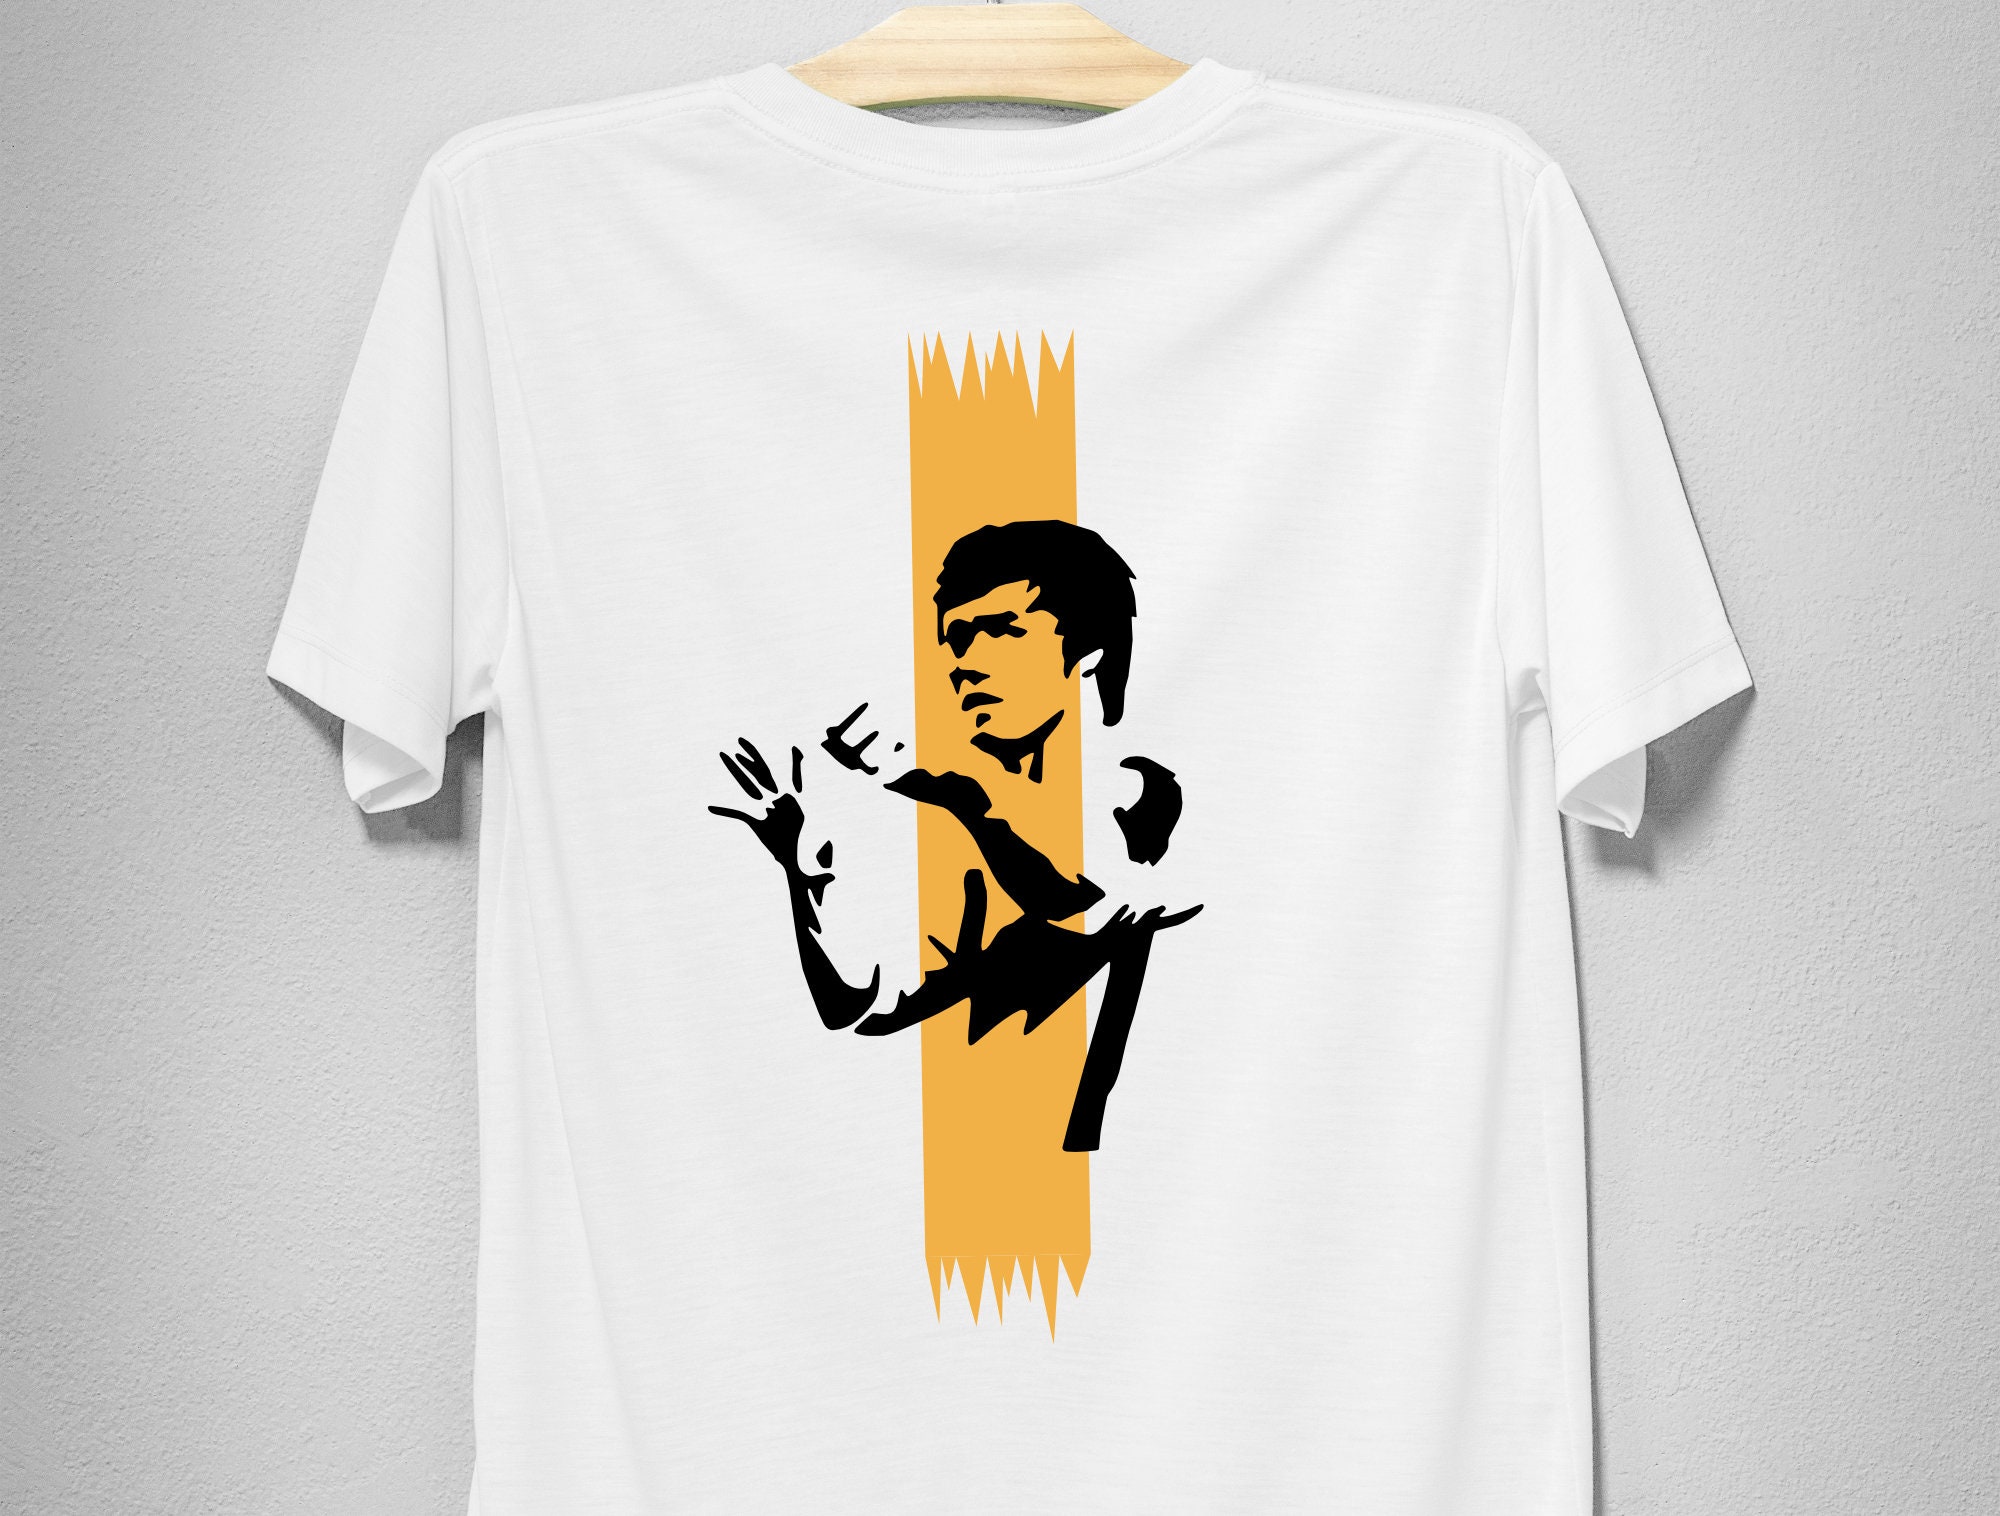 Bruce Lee Cream and Brown Unisex T-Shirt with Signature Kleding Herenkleding Overhemden & T-shirts Overhemden Size Small 